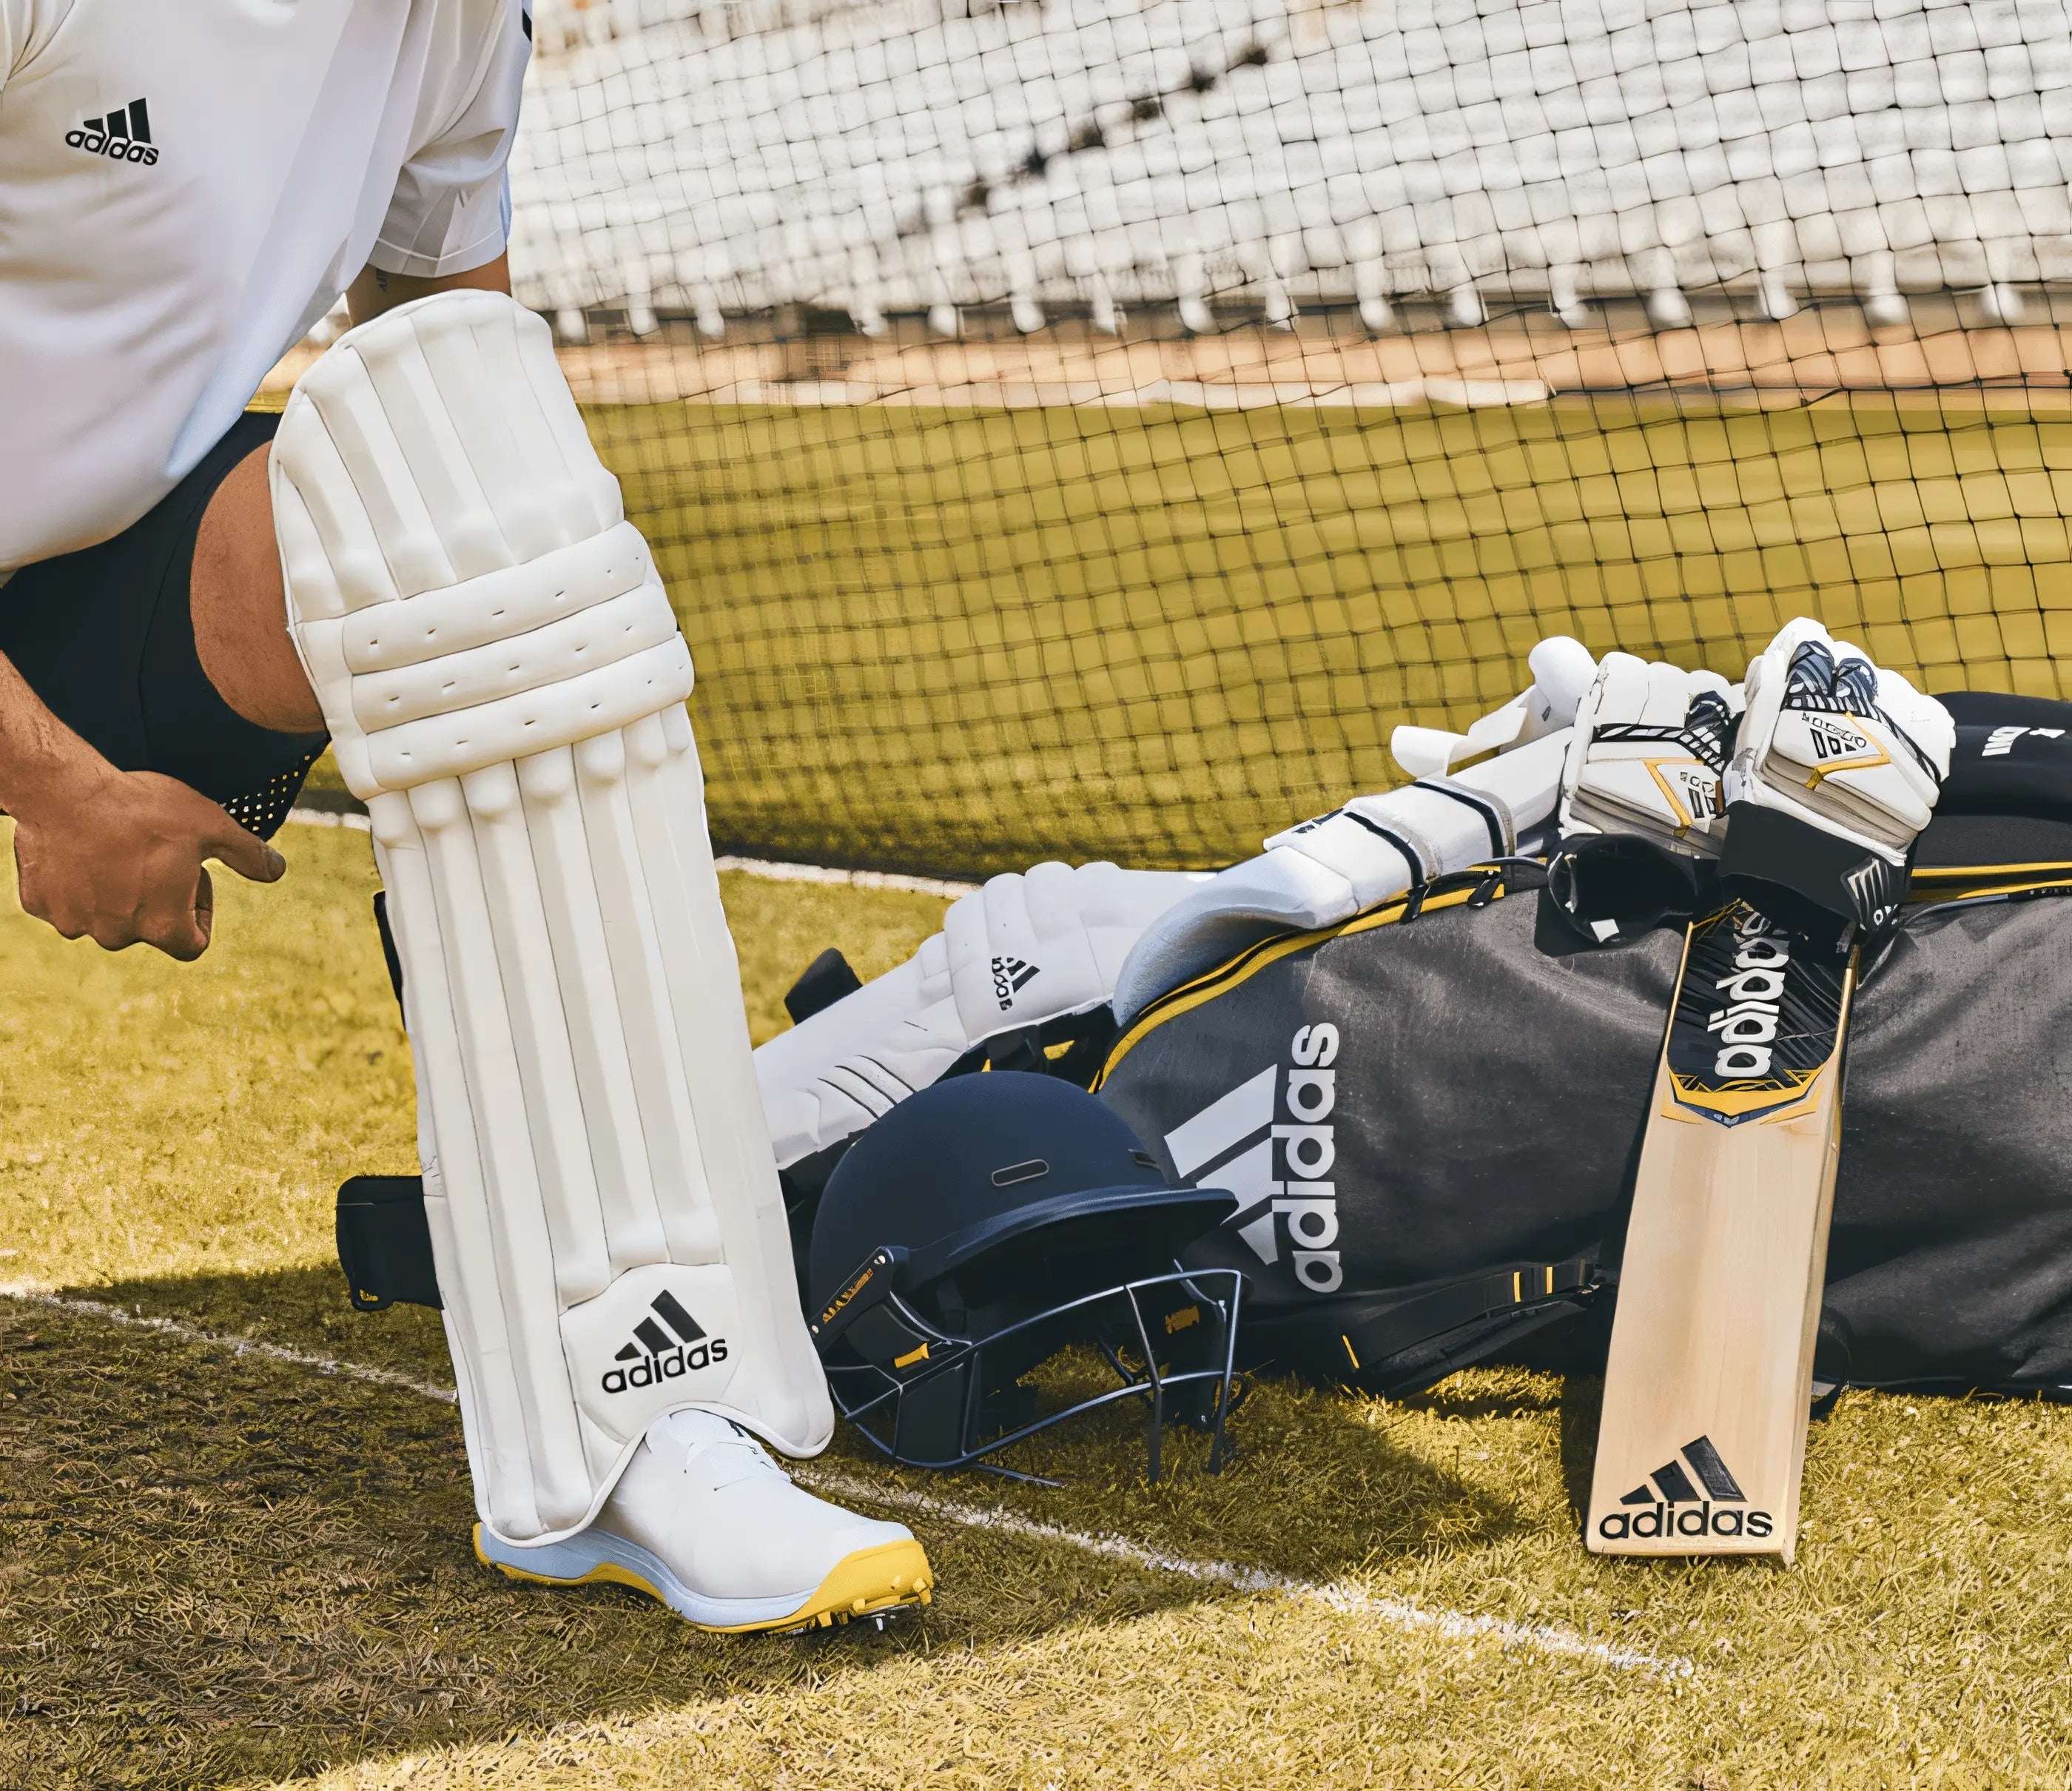 Adidas Cricket Batting Protection